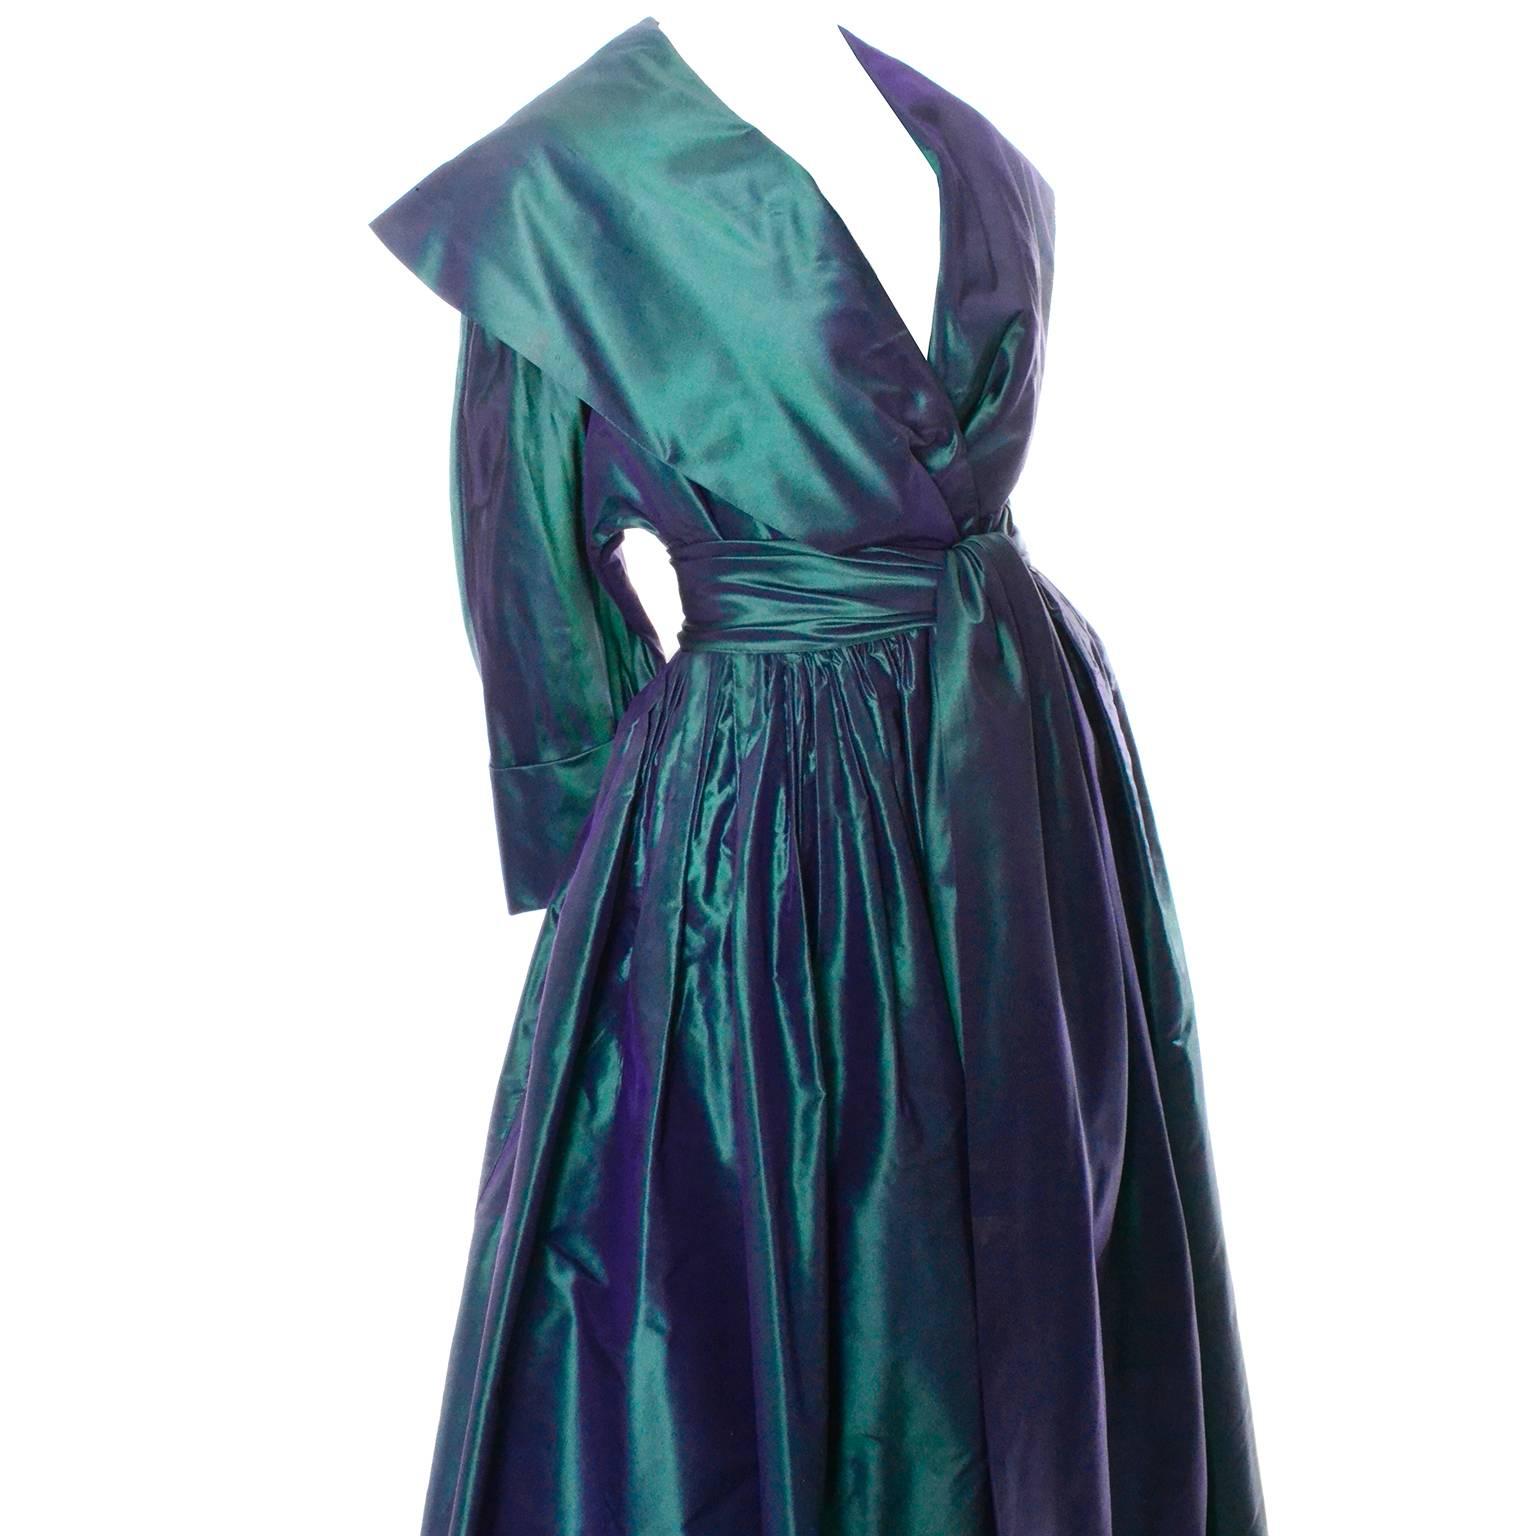 Women's Carolyne Roehm Vintage Dress in Iridescent Green Taffeta From Bergdorf Goodman